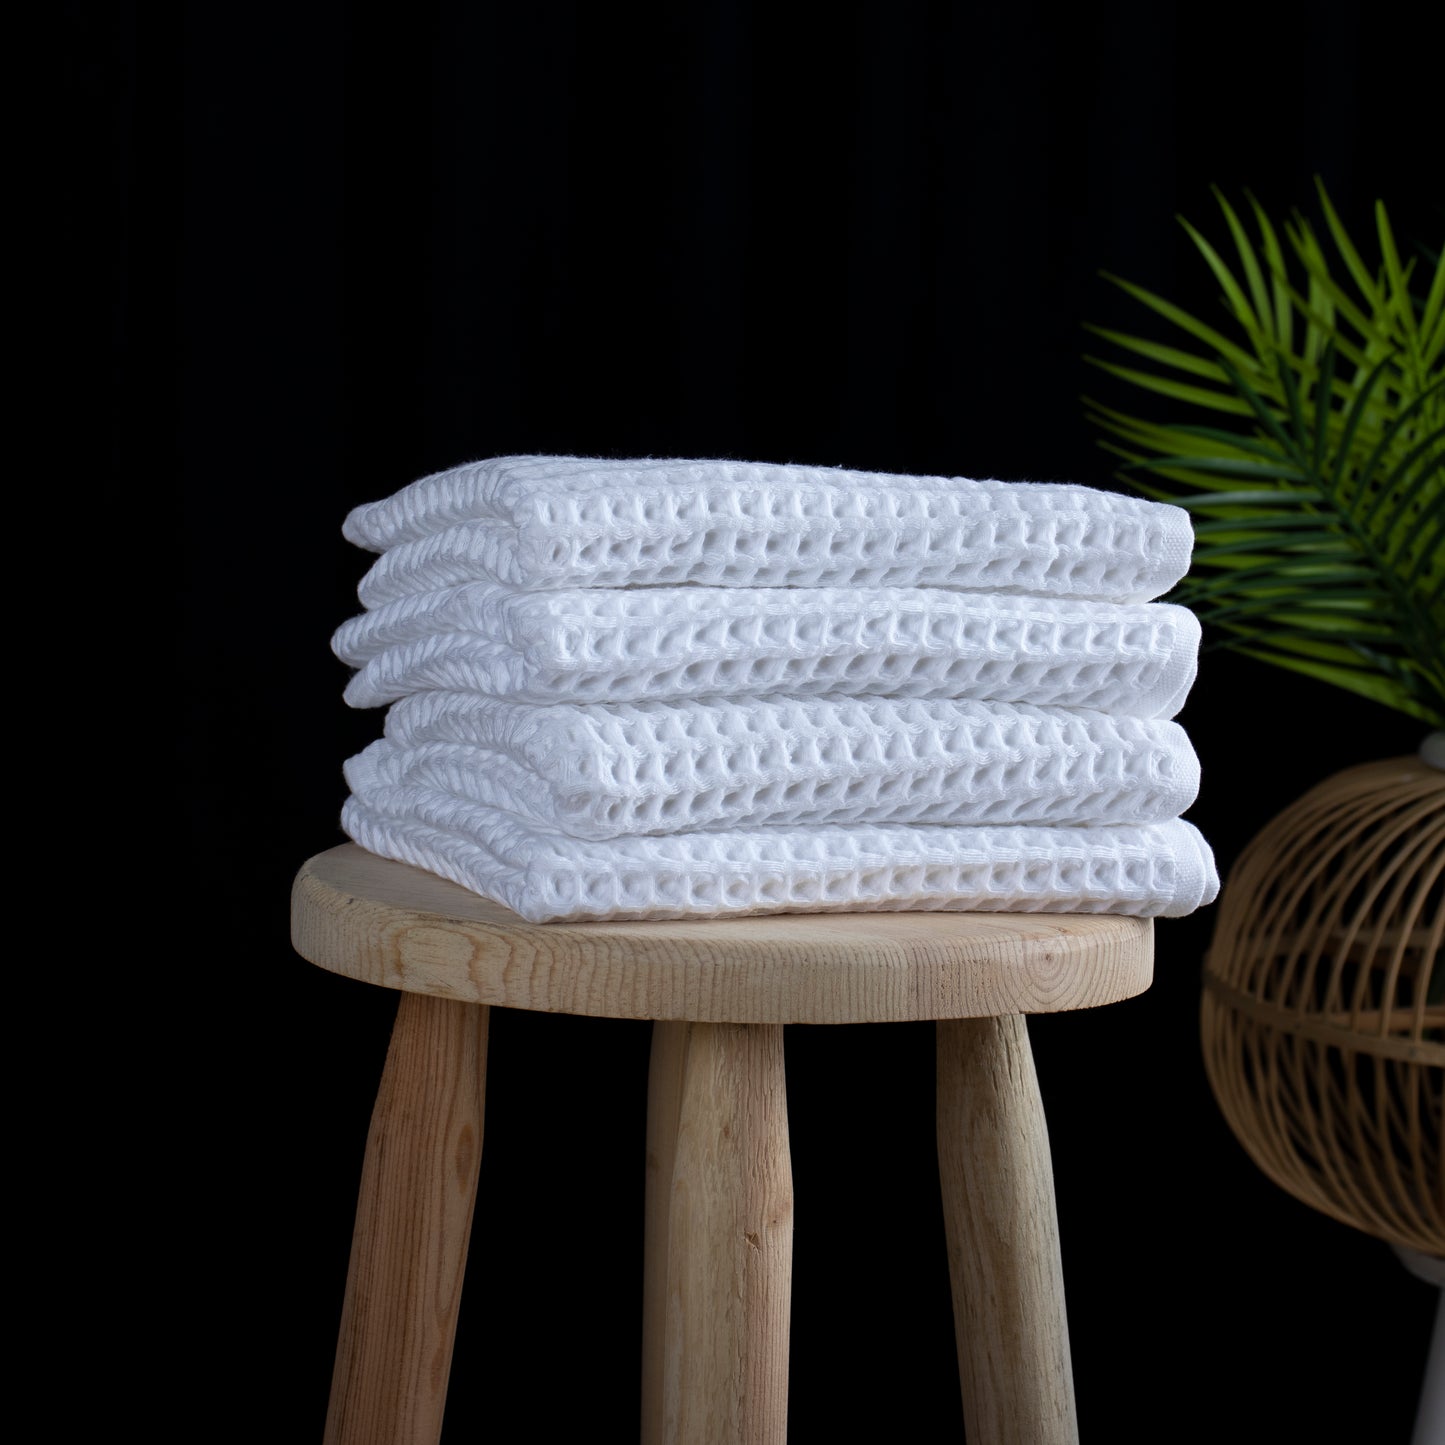 Honeycomb Towel - Waffle Towel - Kitchen and Hand Towel - White